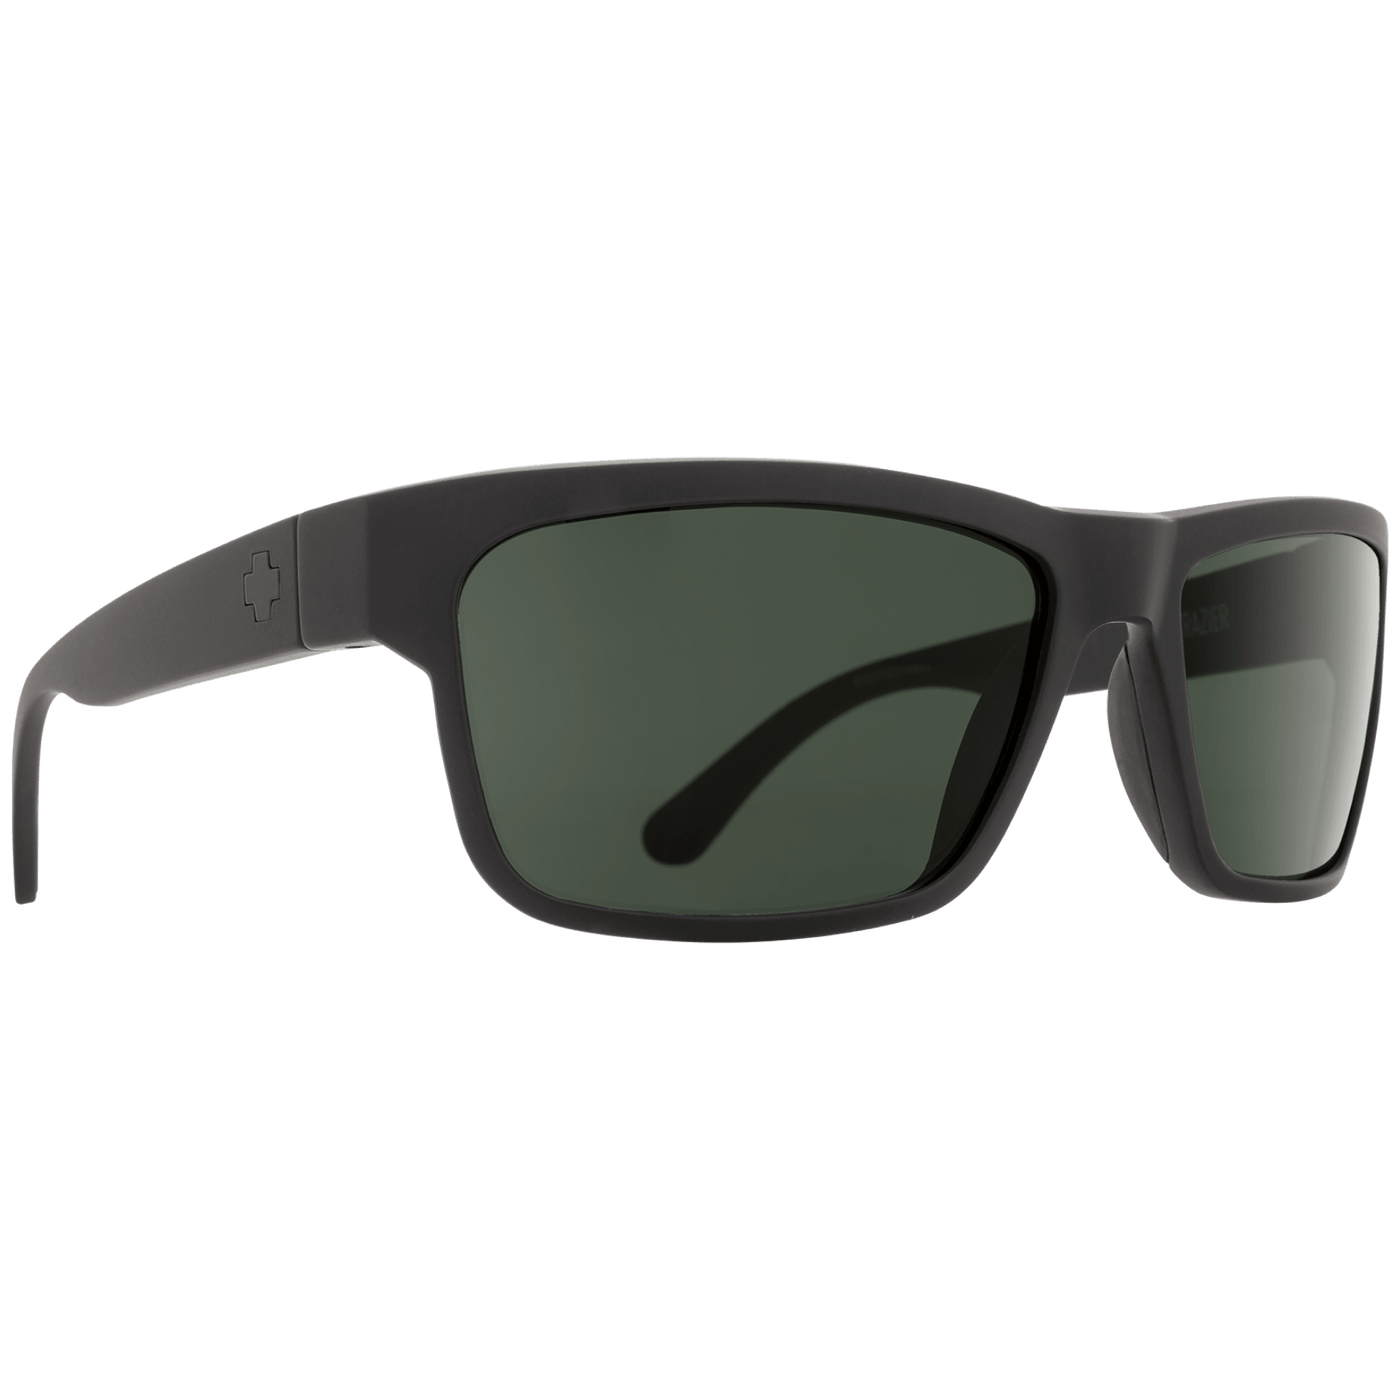 SPY FRAZIER SOSI Sunglasses - Matte Black Frame 8Lines Shop - Fast Shipping